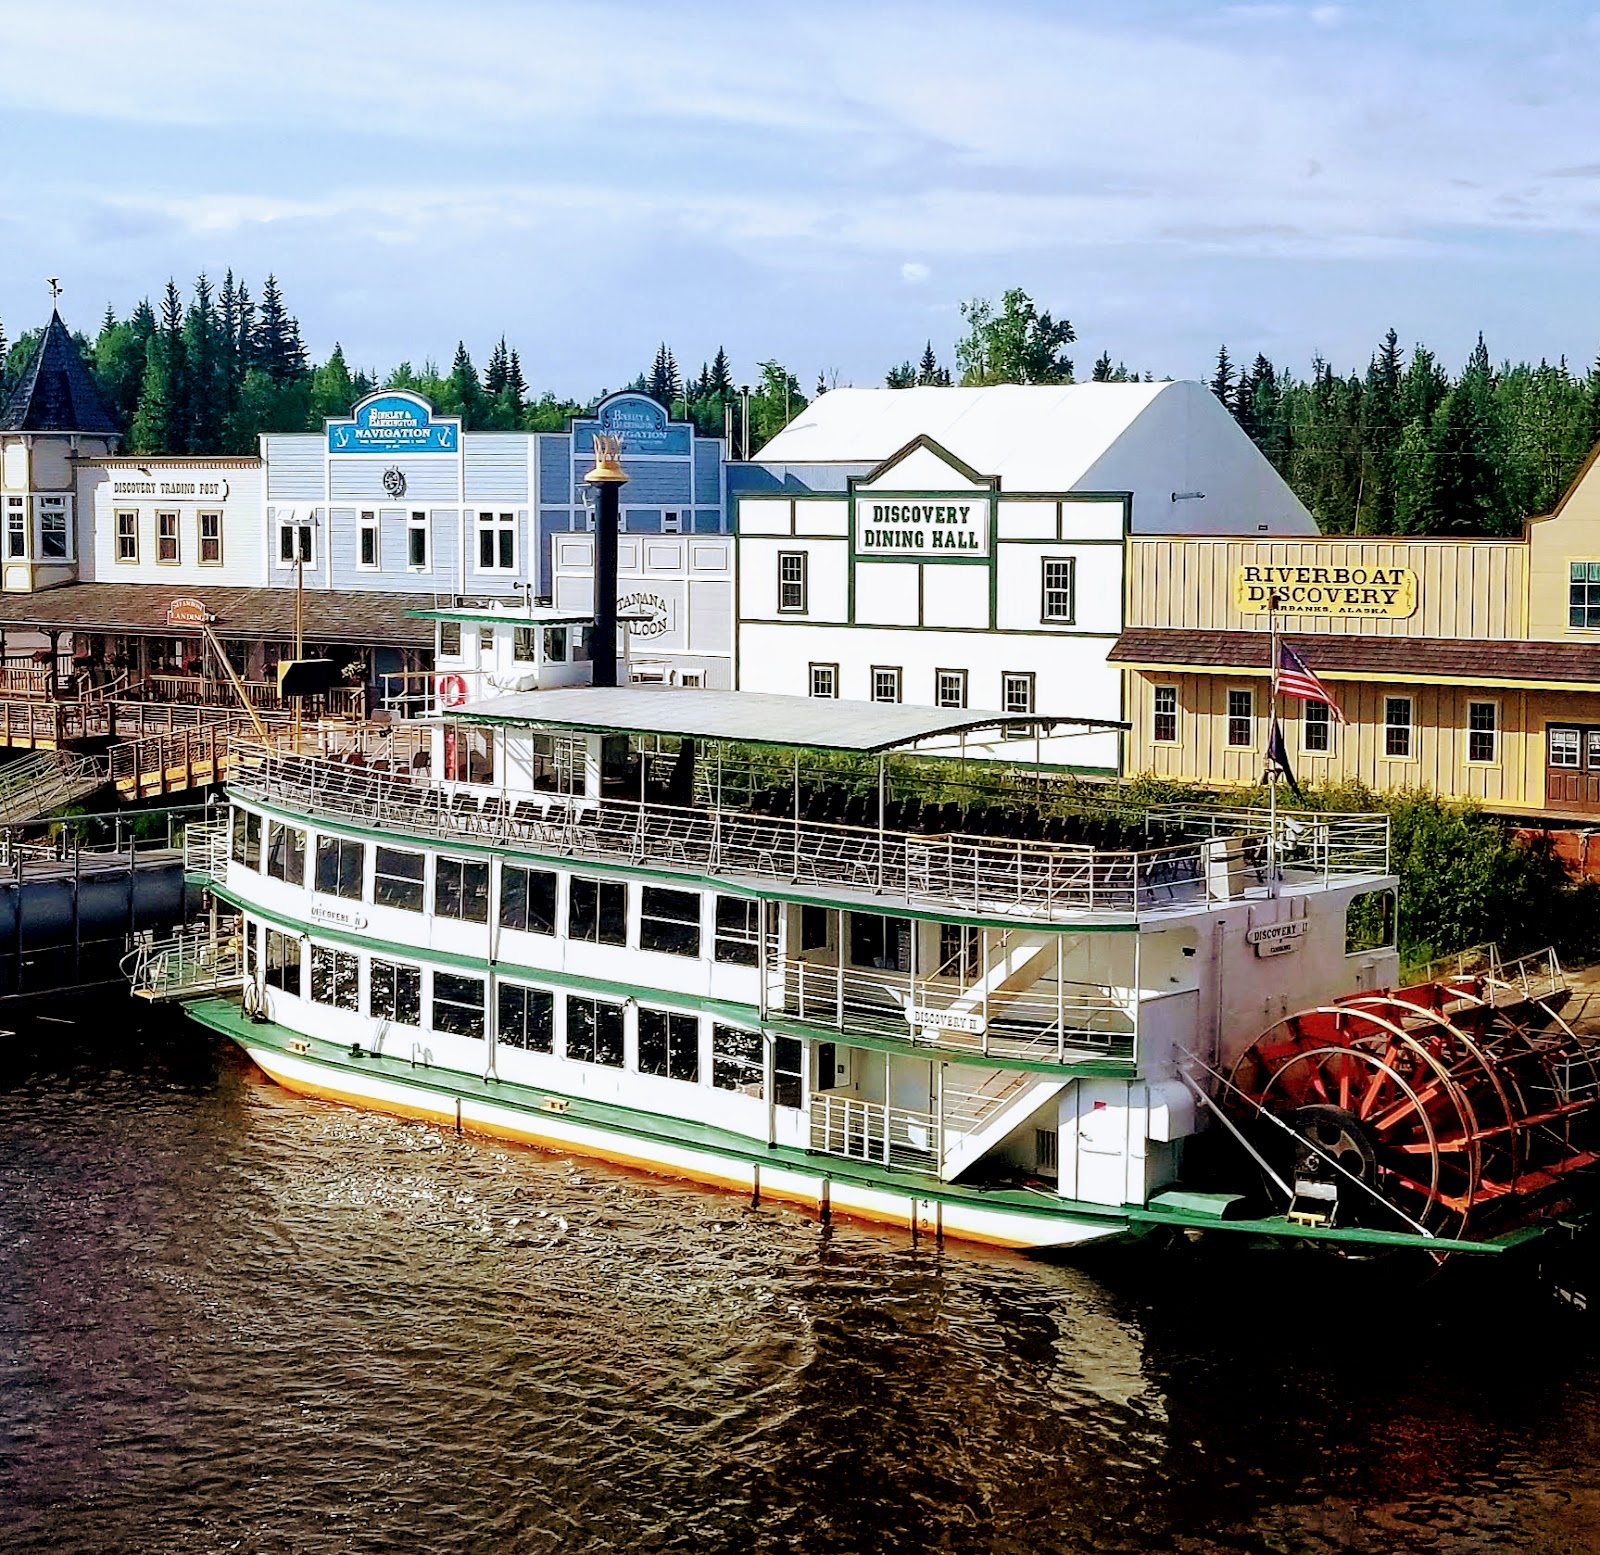 riverboat cruise in fairbanks alaska